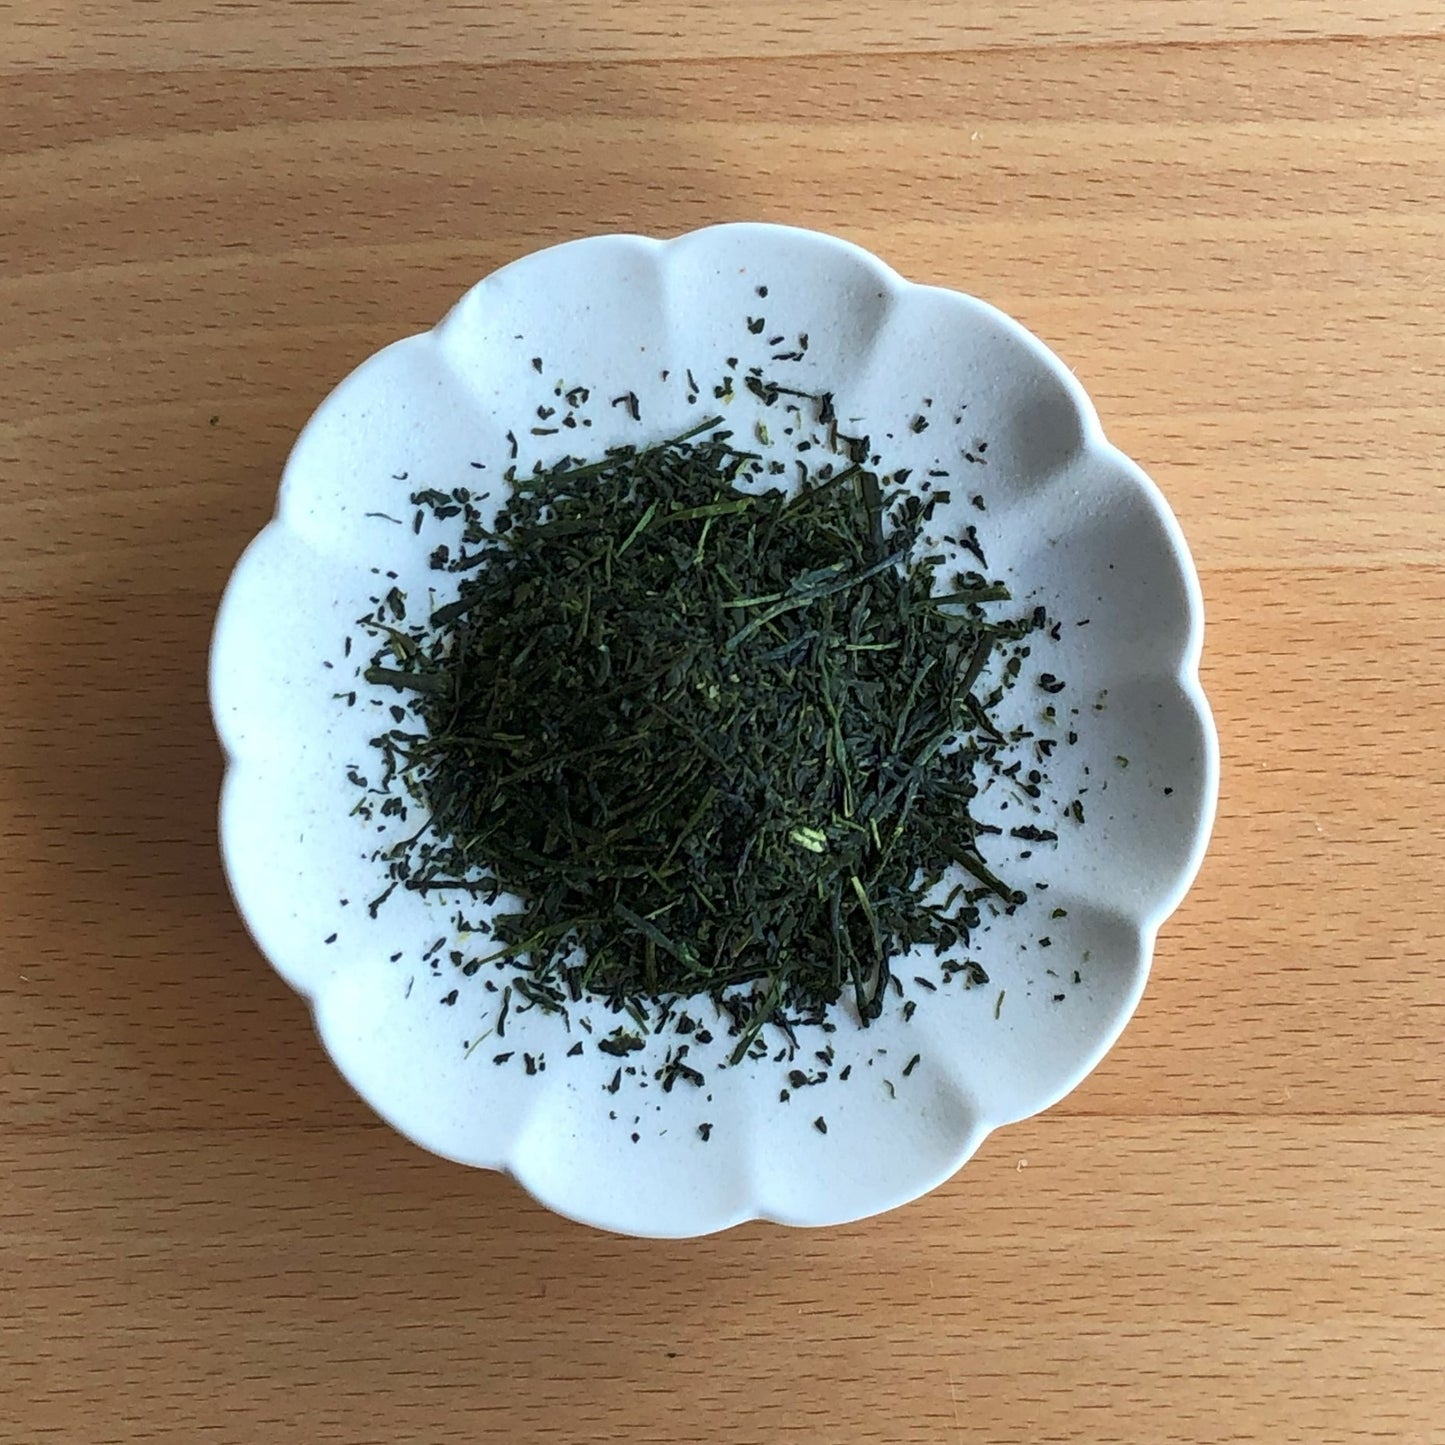 Binchotan Charcoal Roasted - Hoiro Premium Sencha Green Tea 1.76 oz (50g)